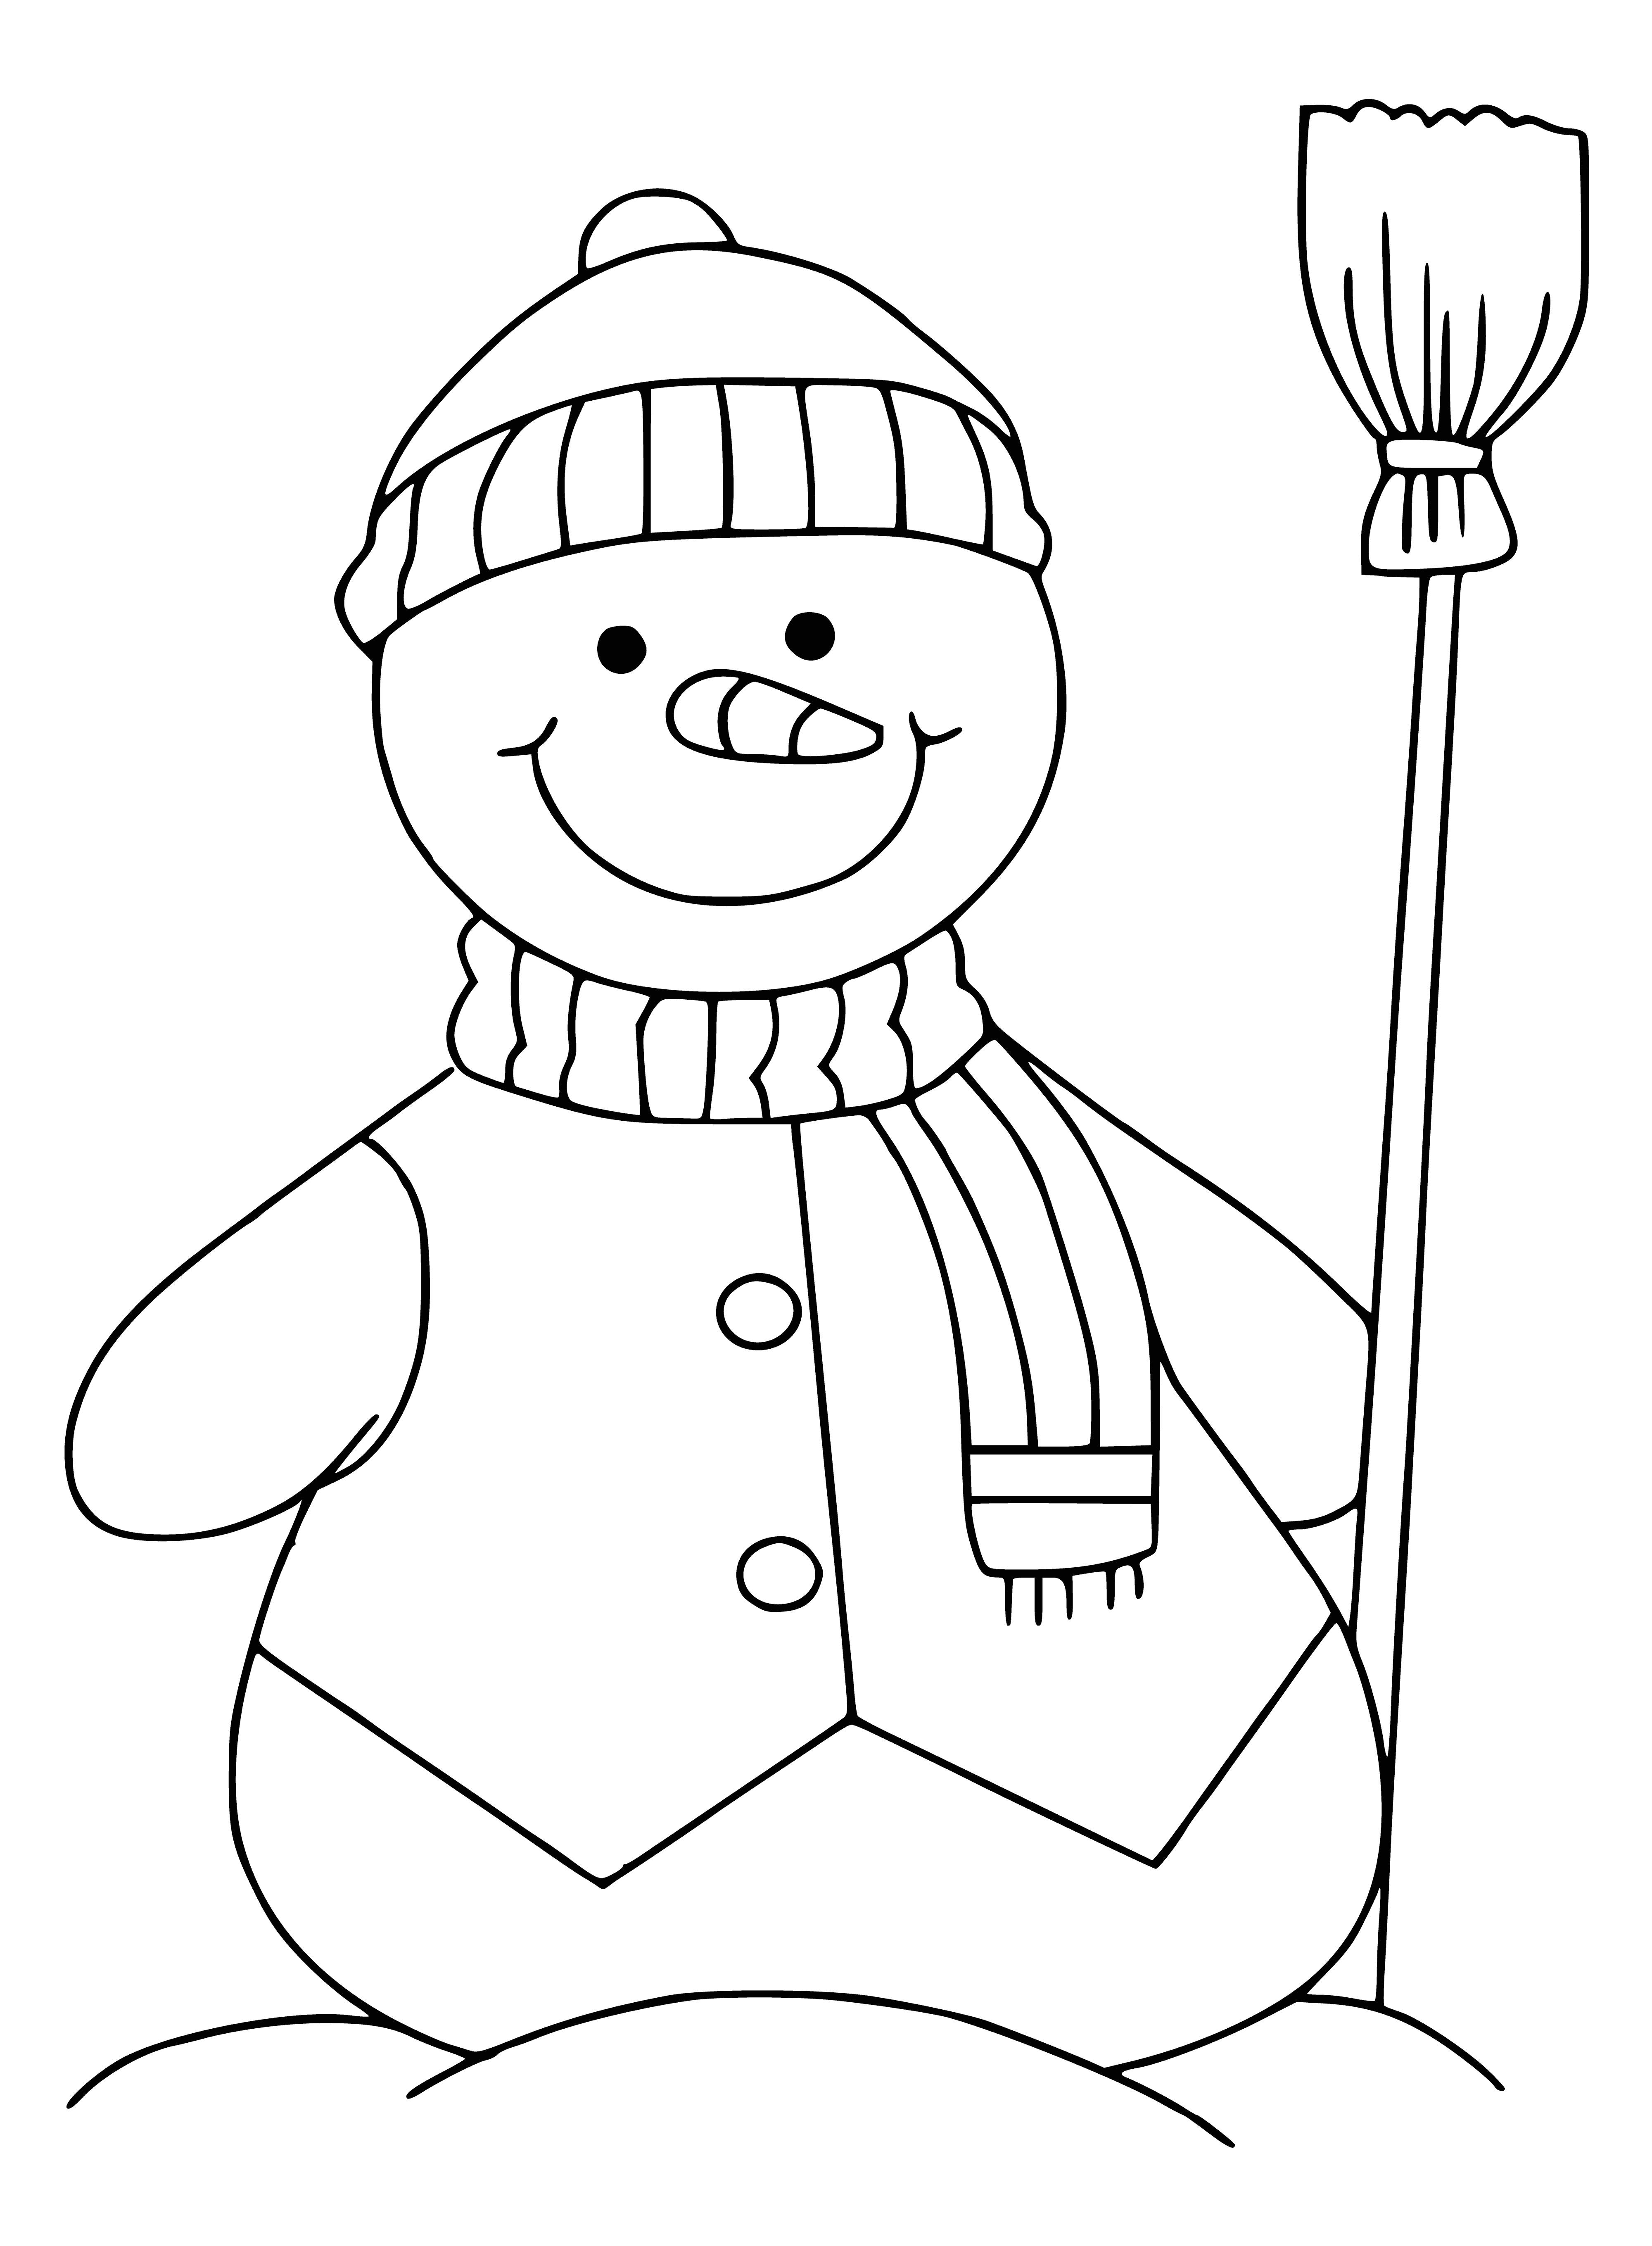 Snowman #5